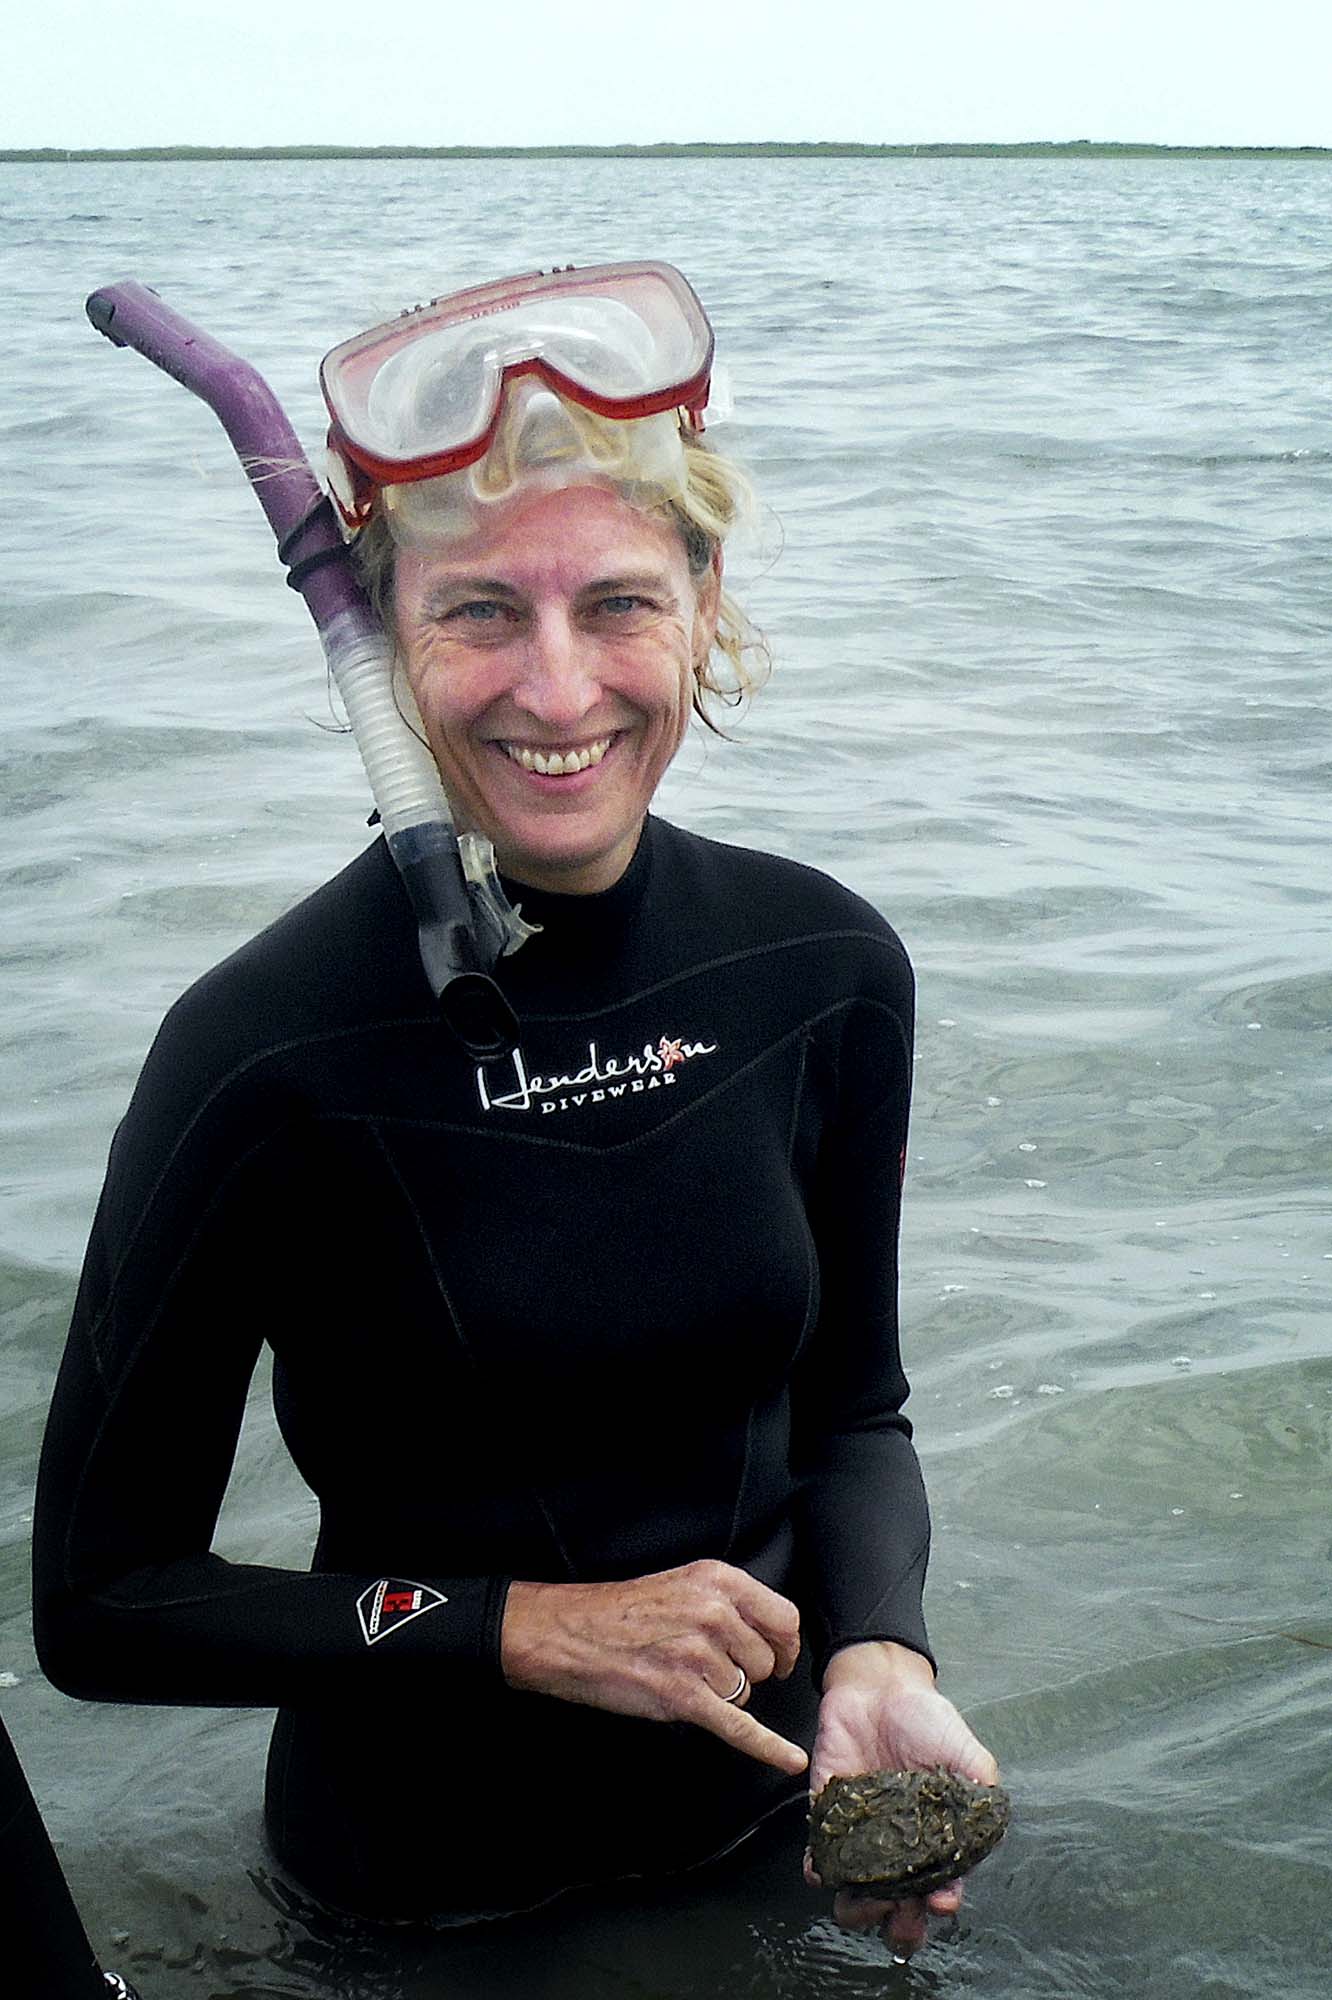 Karen McGlathery in snorkeling gear